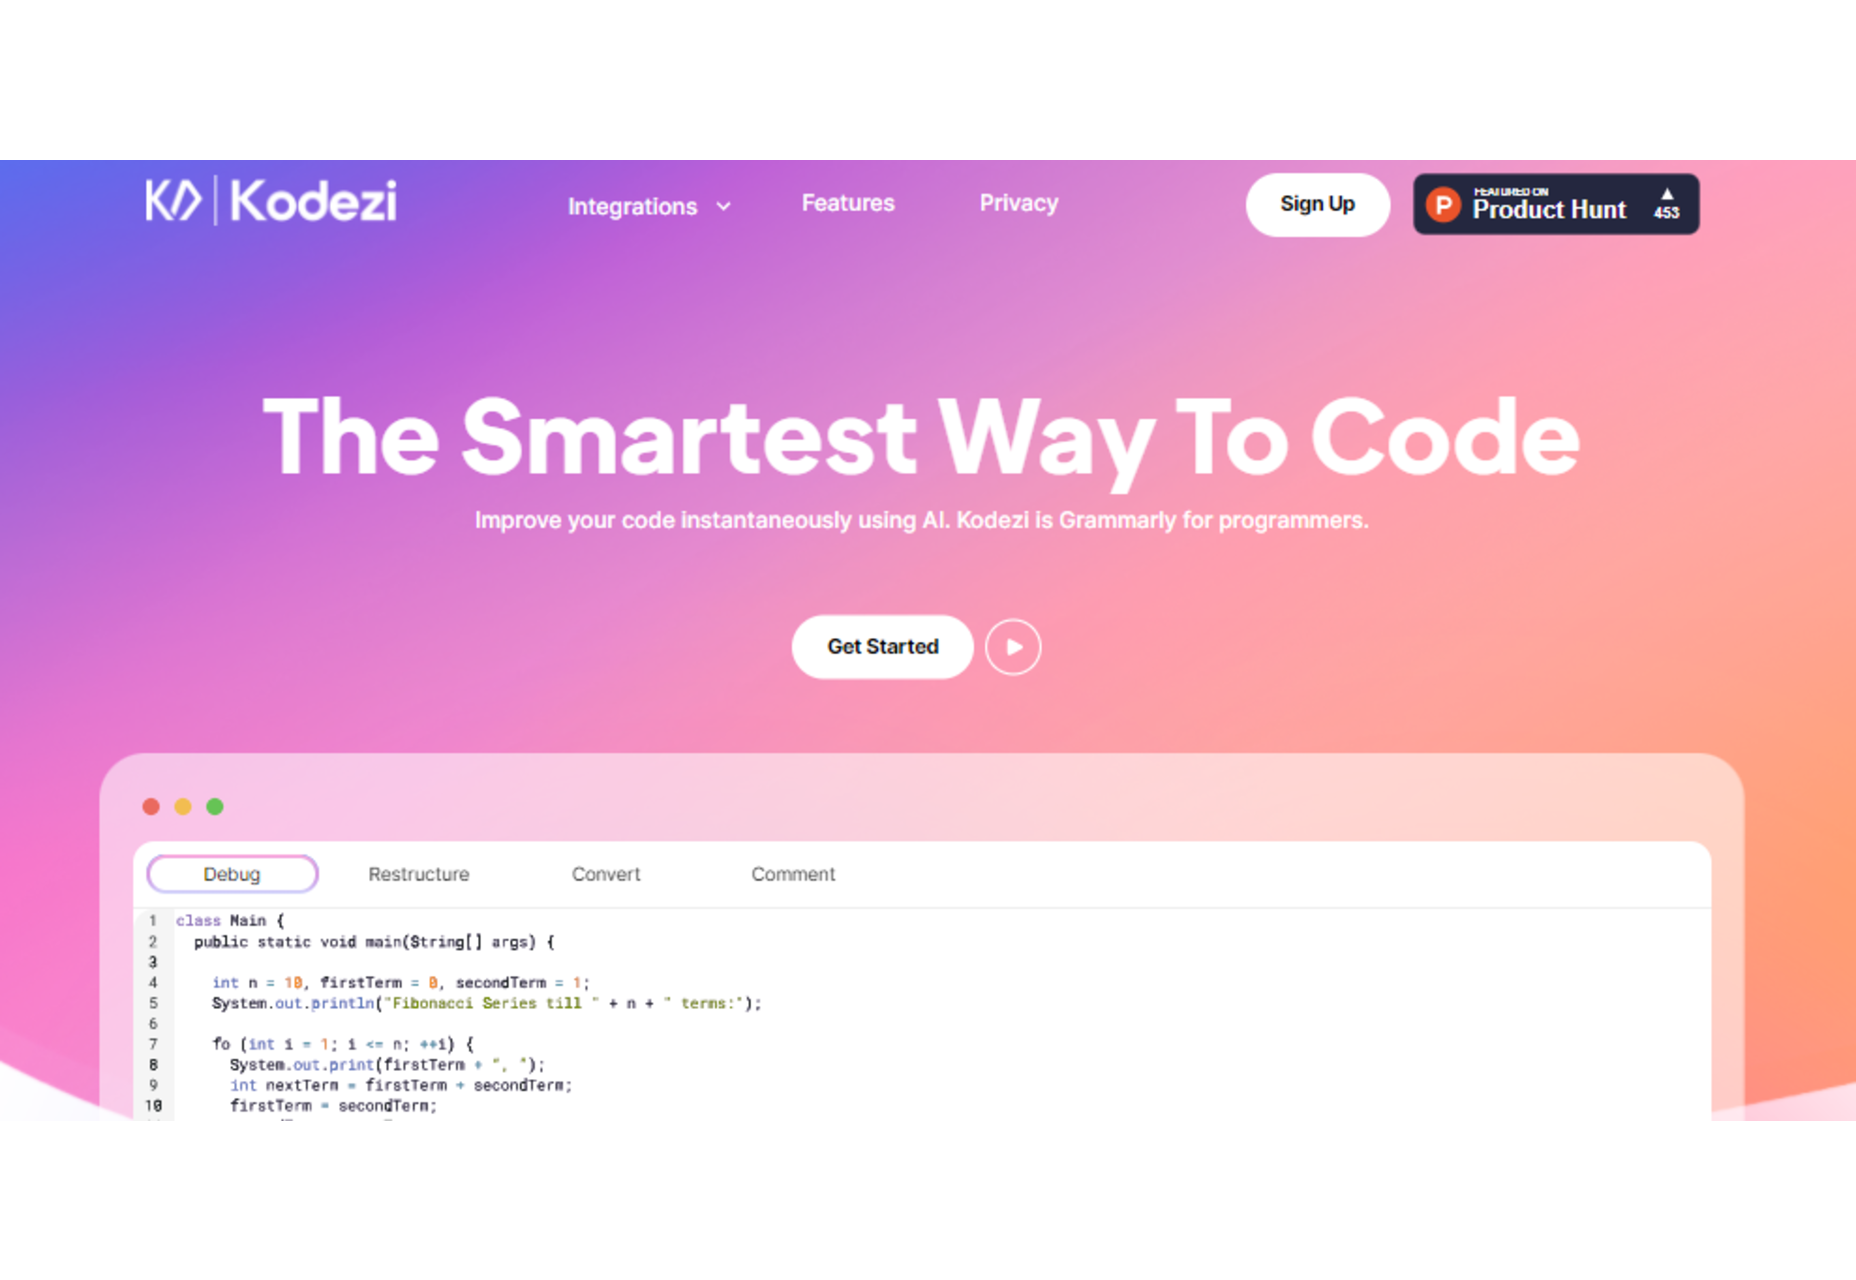 Kodezi grammarly for programming